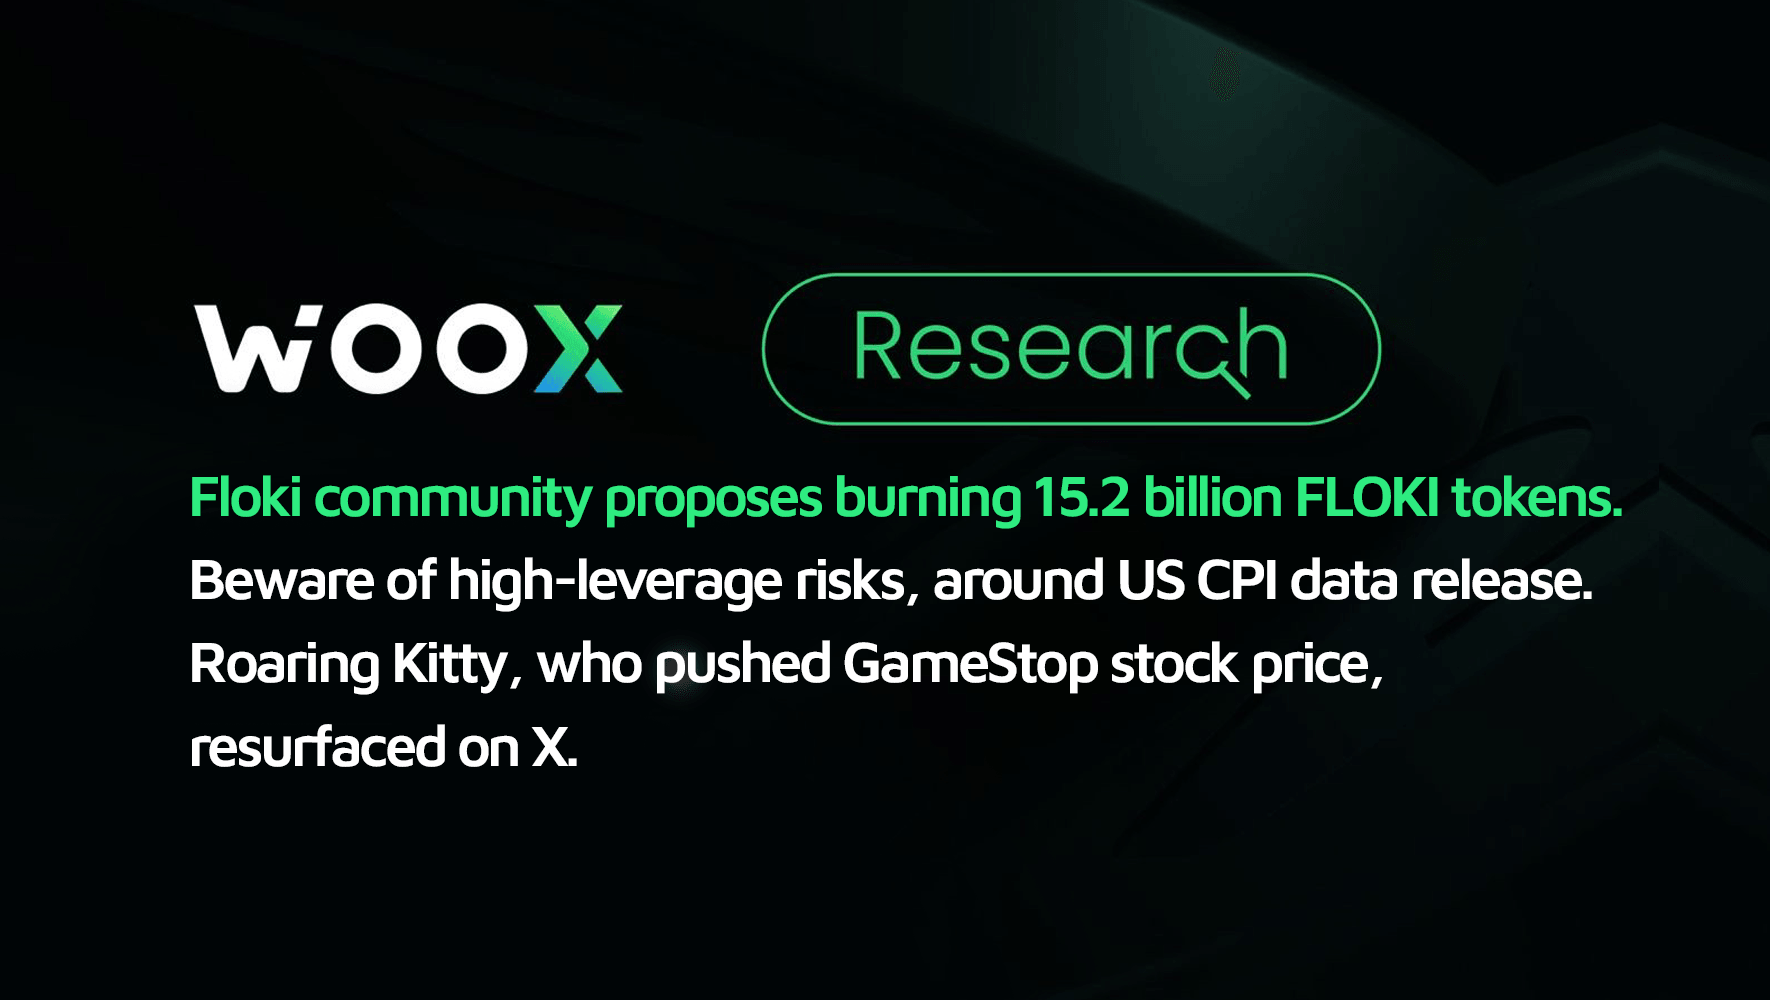 Floki community proposes burning 15.2 billion FLOKI tokens